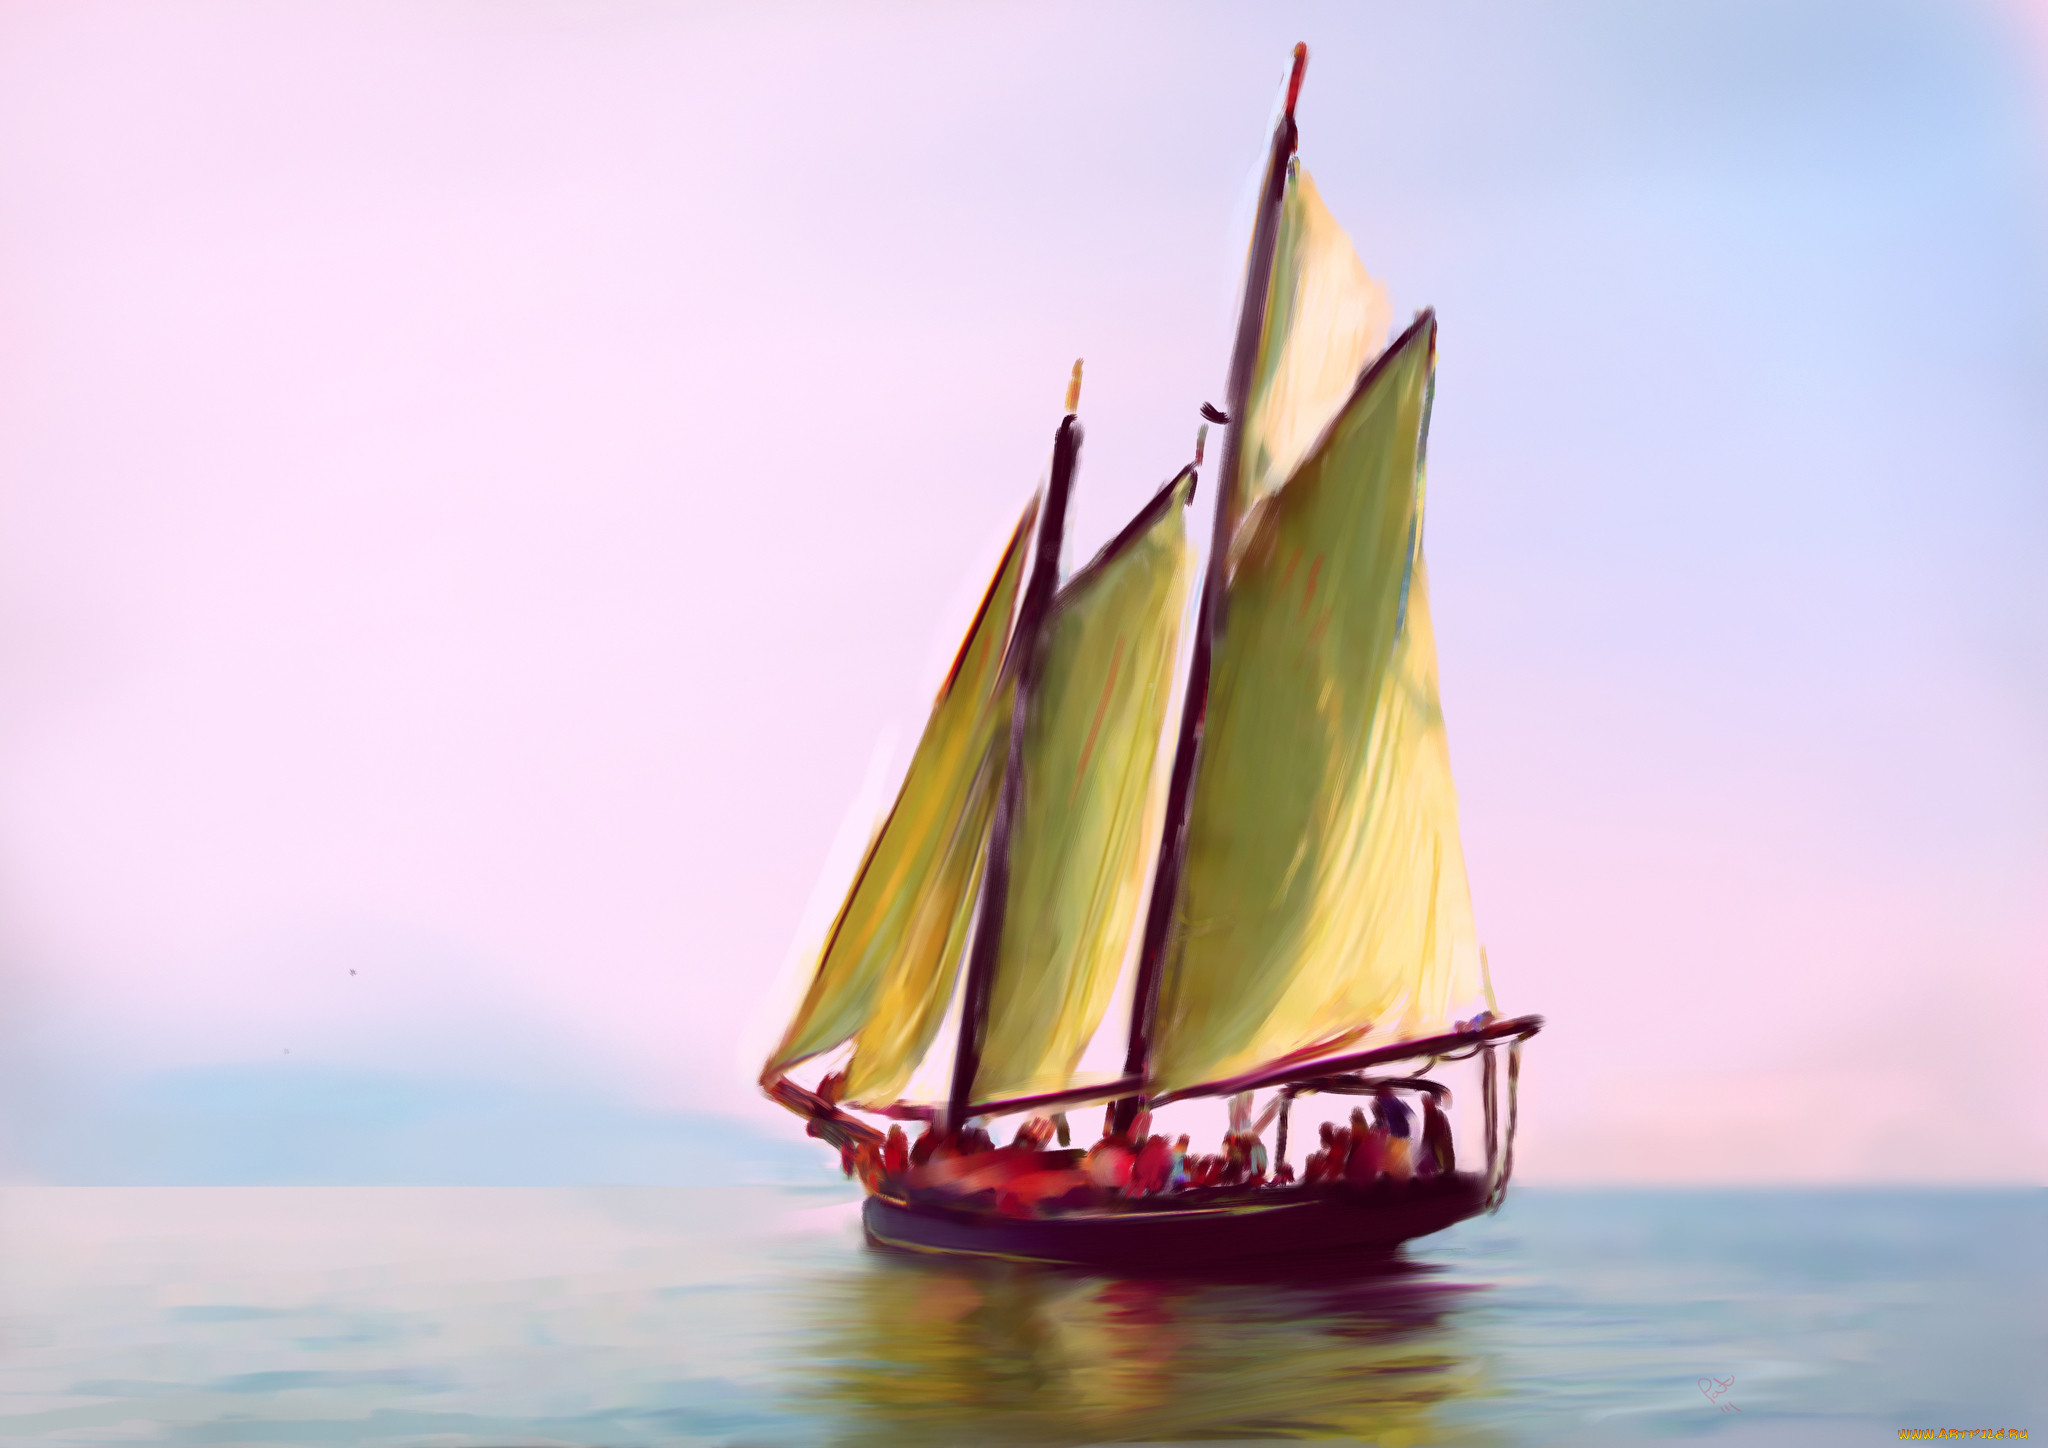 Sail art. Парус на лодке. Корабль с цветными парусами. Часы-картина "море". Цветные паруса.